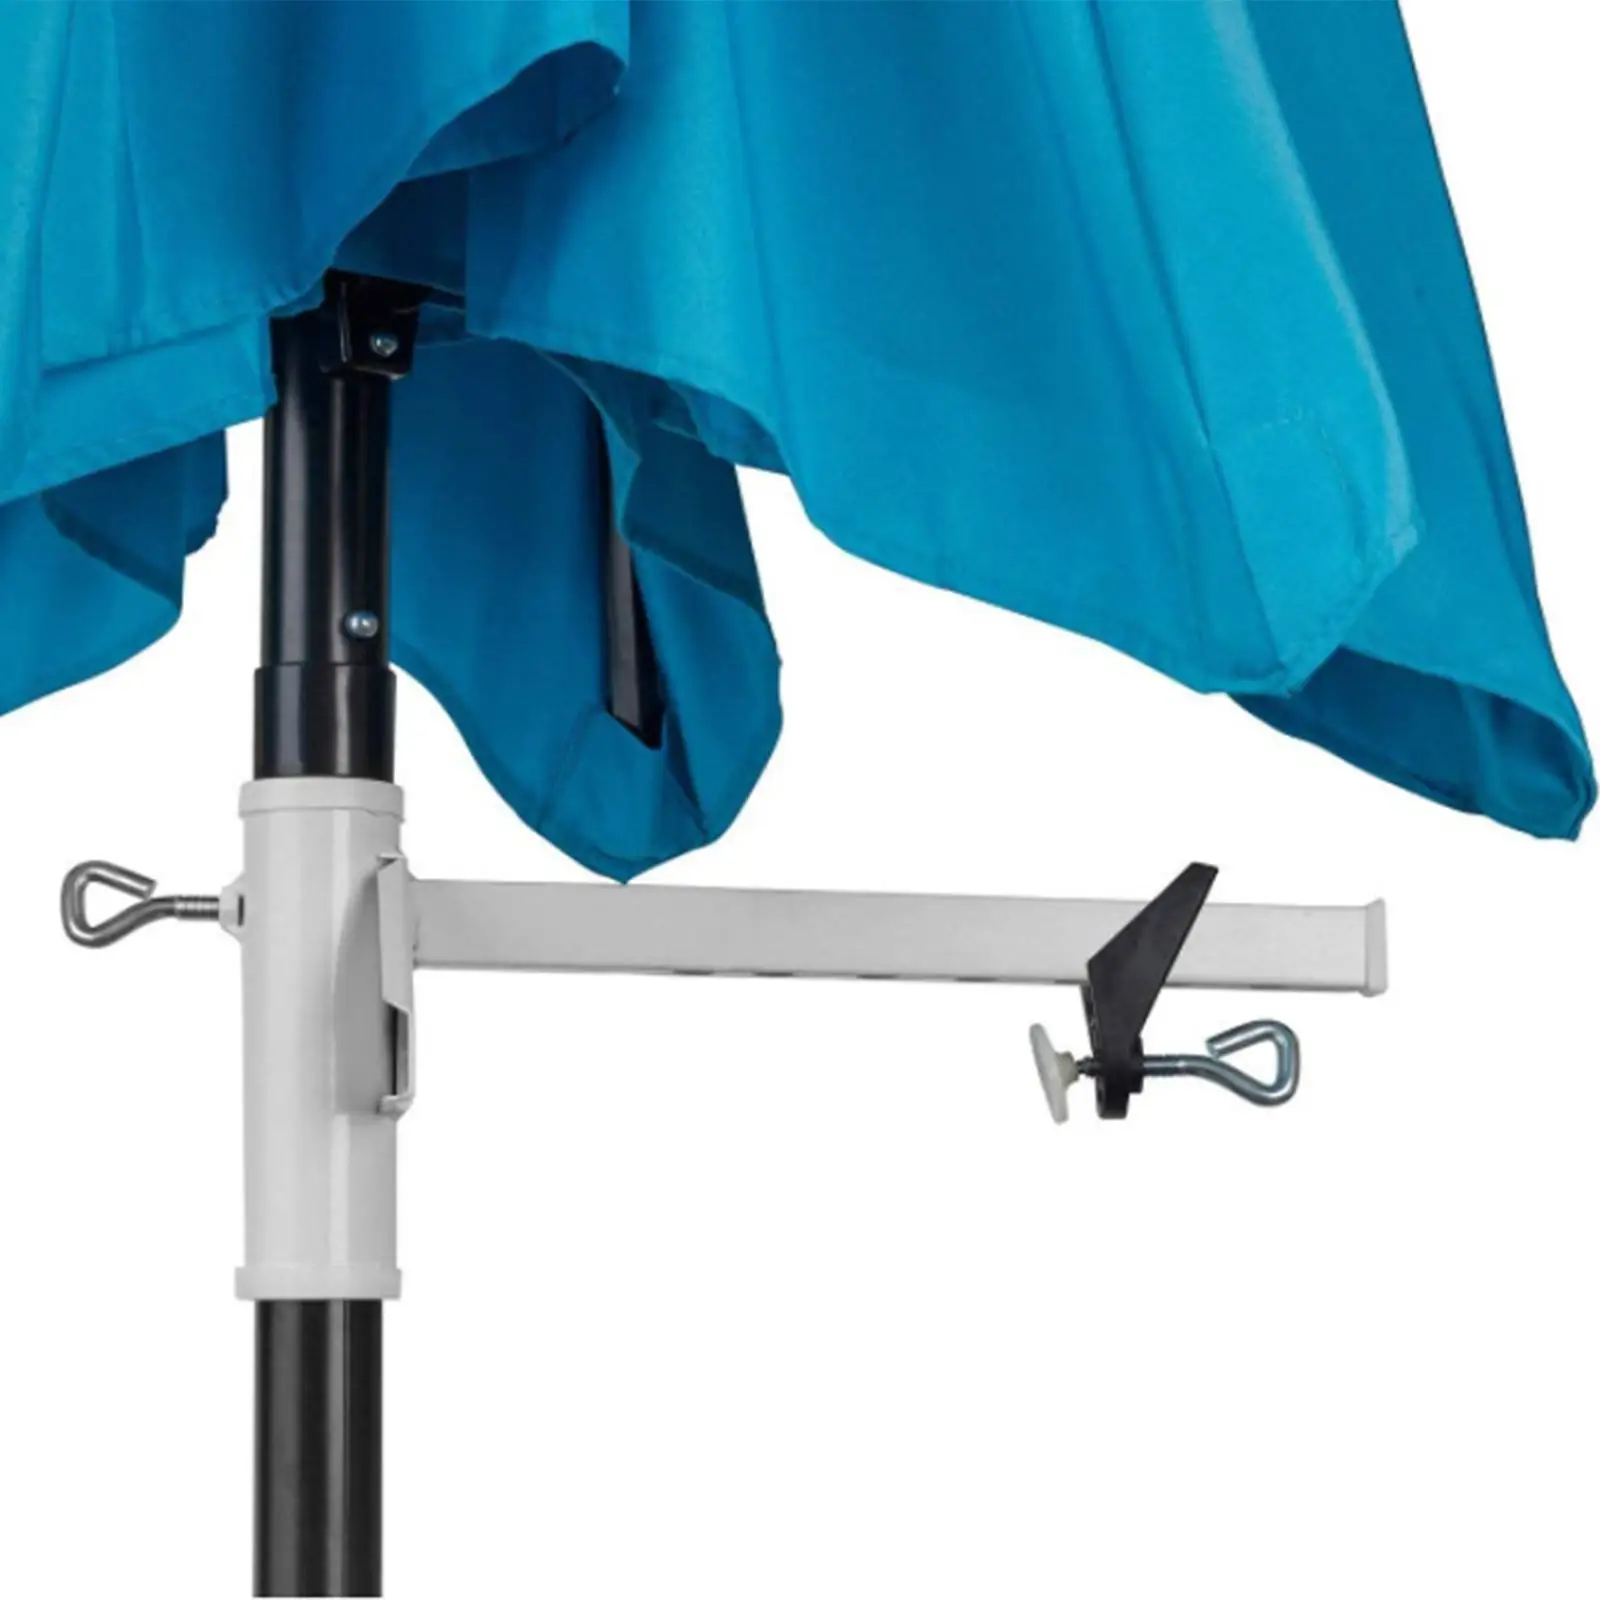 Parasol Holder Adjustable Umbrella Clamp Patio Umbrella Holder Mounting Bracket for Pool Deck Railing Outdoor Courtyard Boats